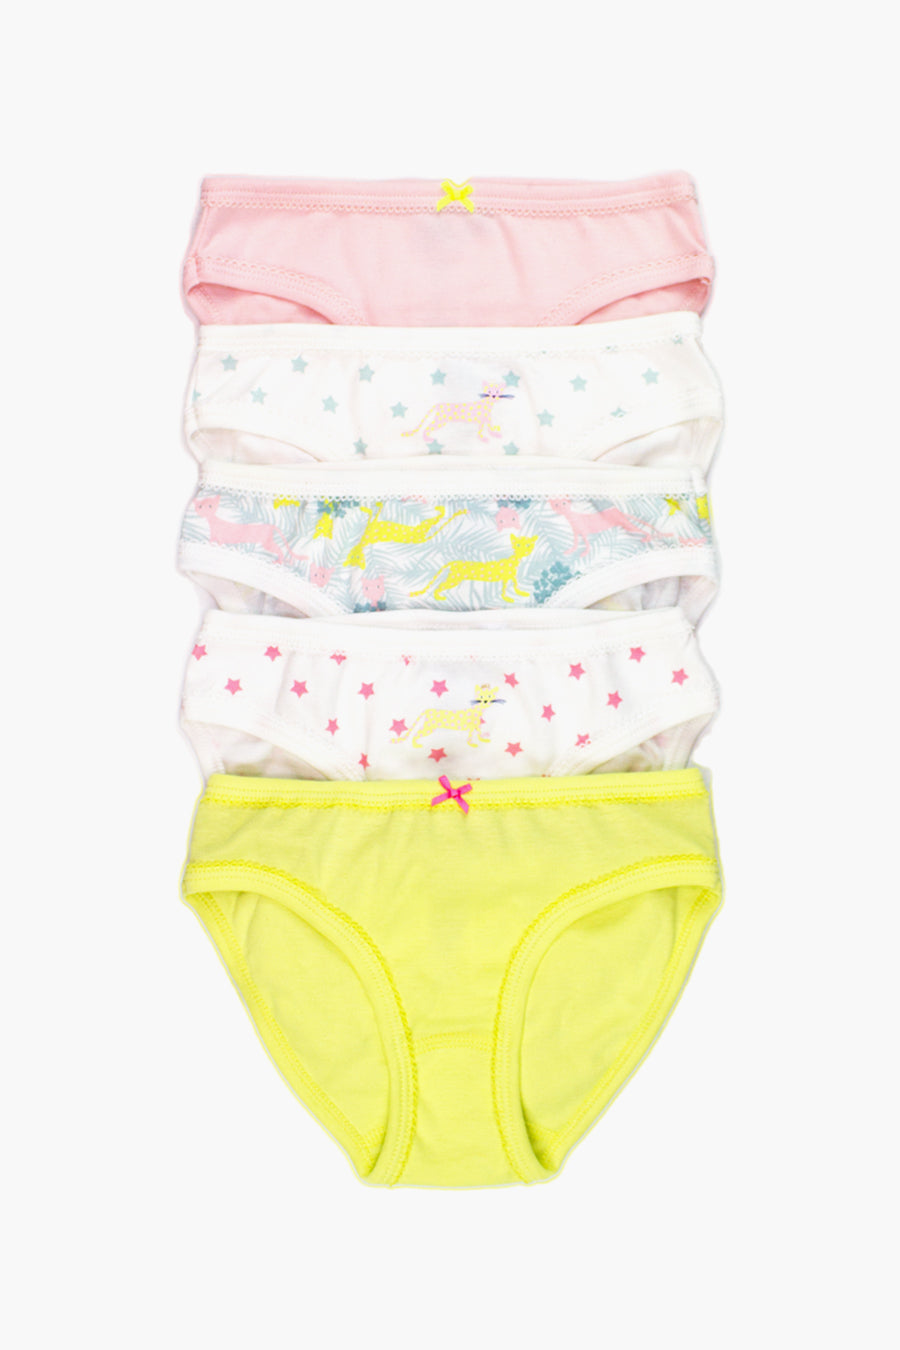 Petit Bateau 5-Pack Girls Underwear - Multi (Size 3 left)